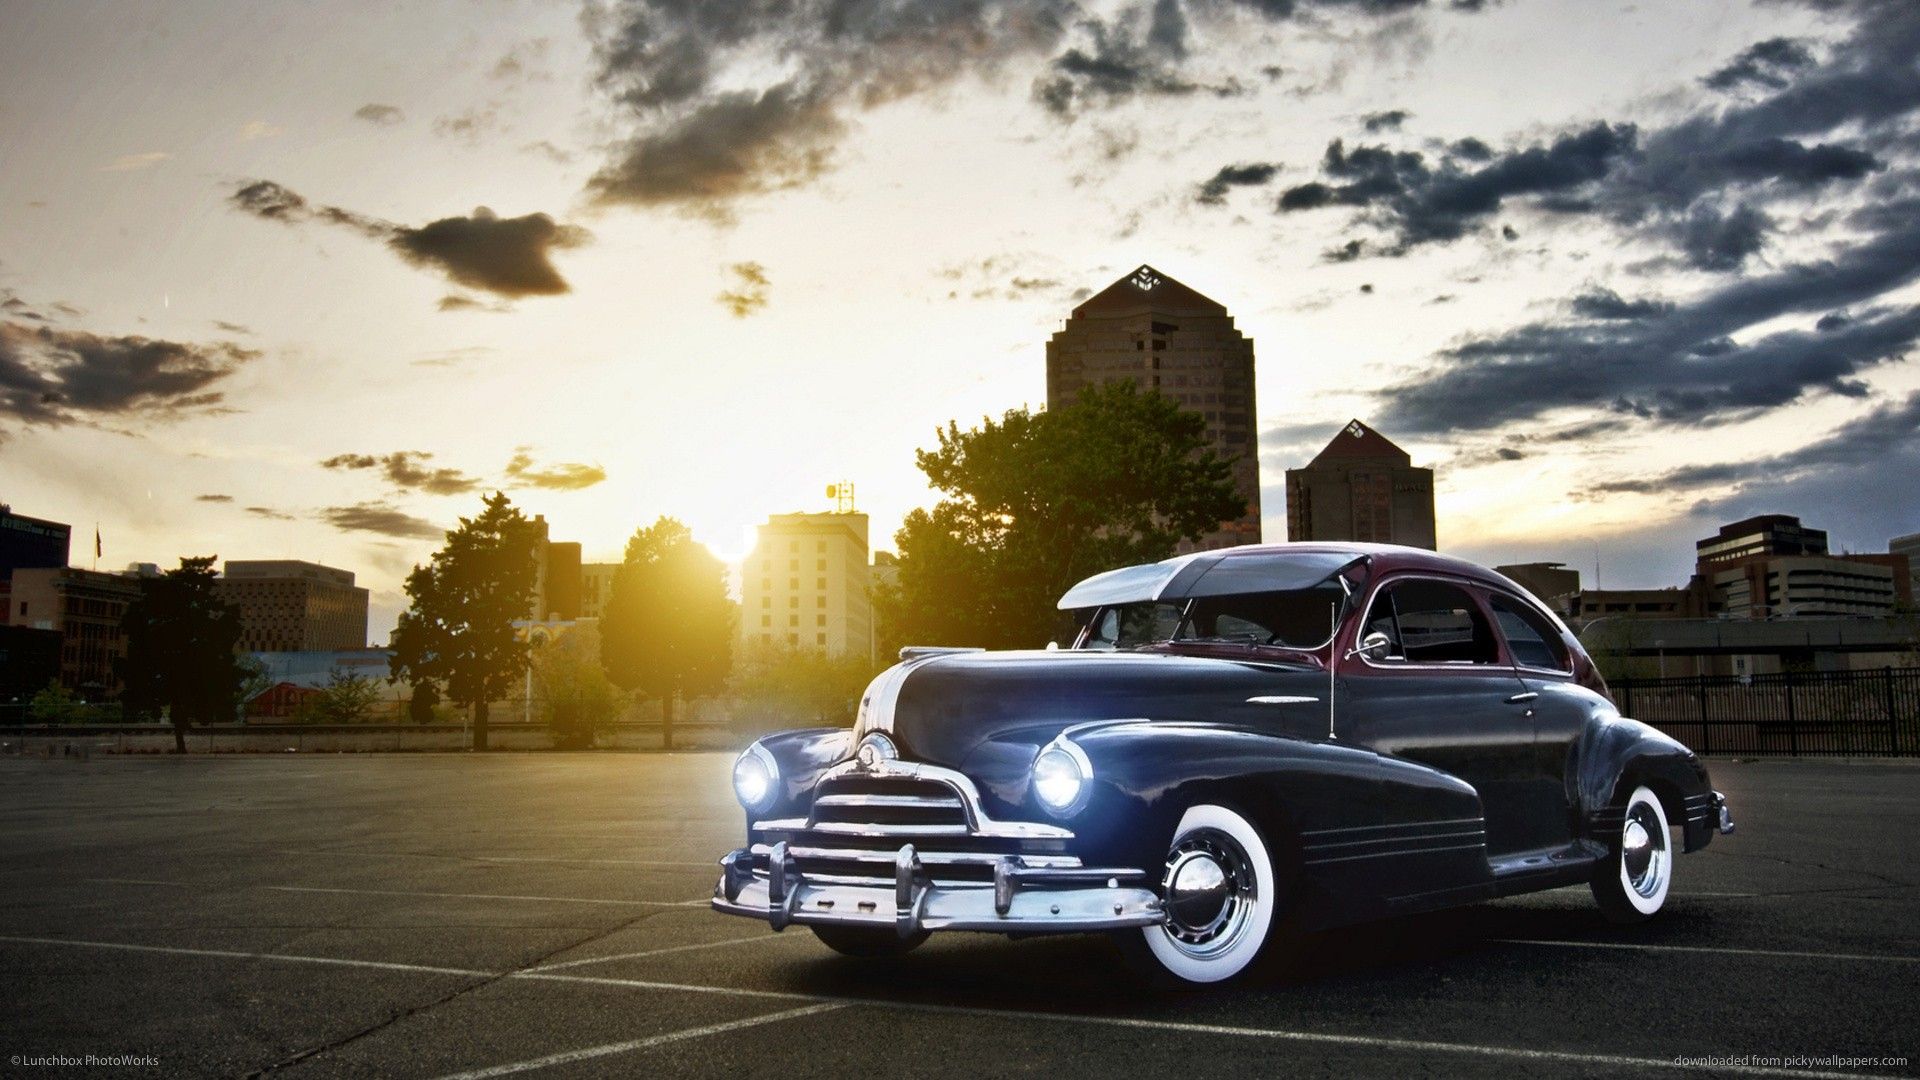 Retro classic cars buildings cities sunset sky clouds wallpaperx1080